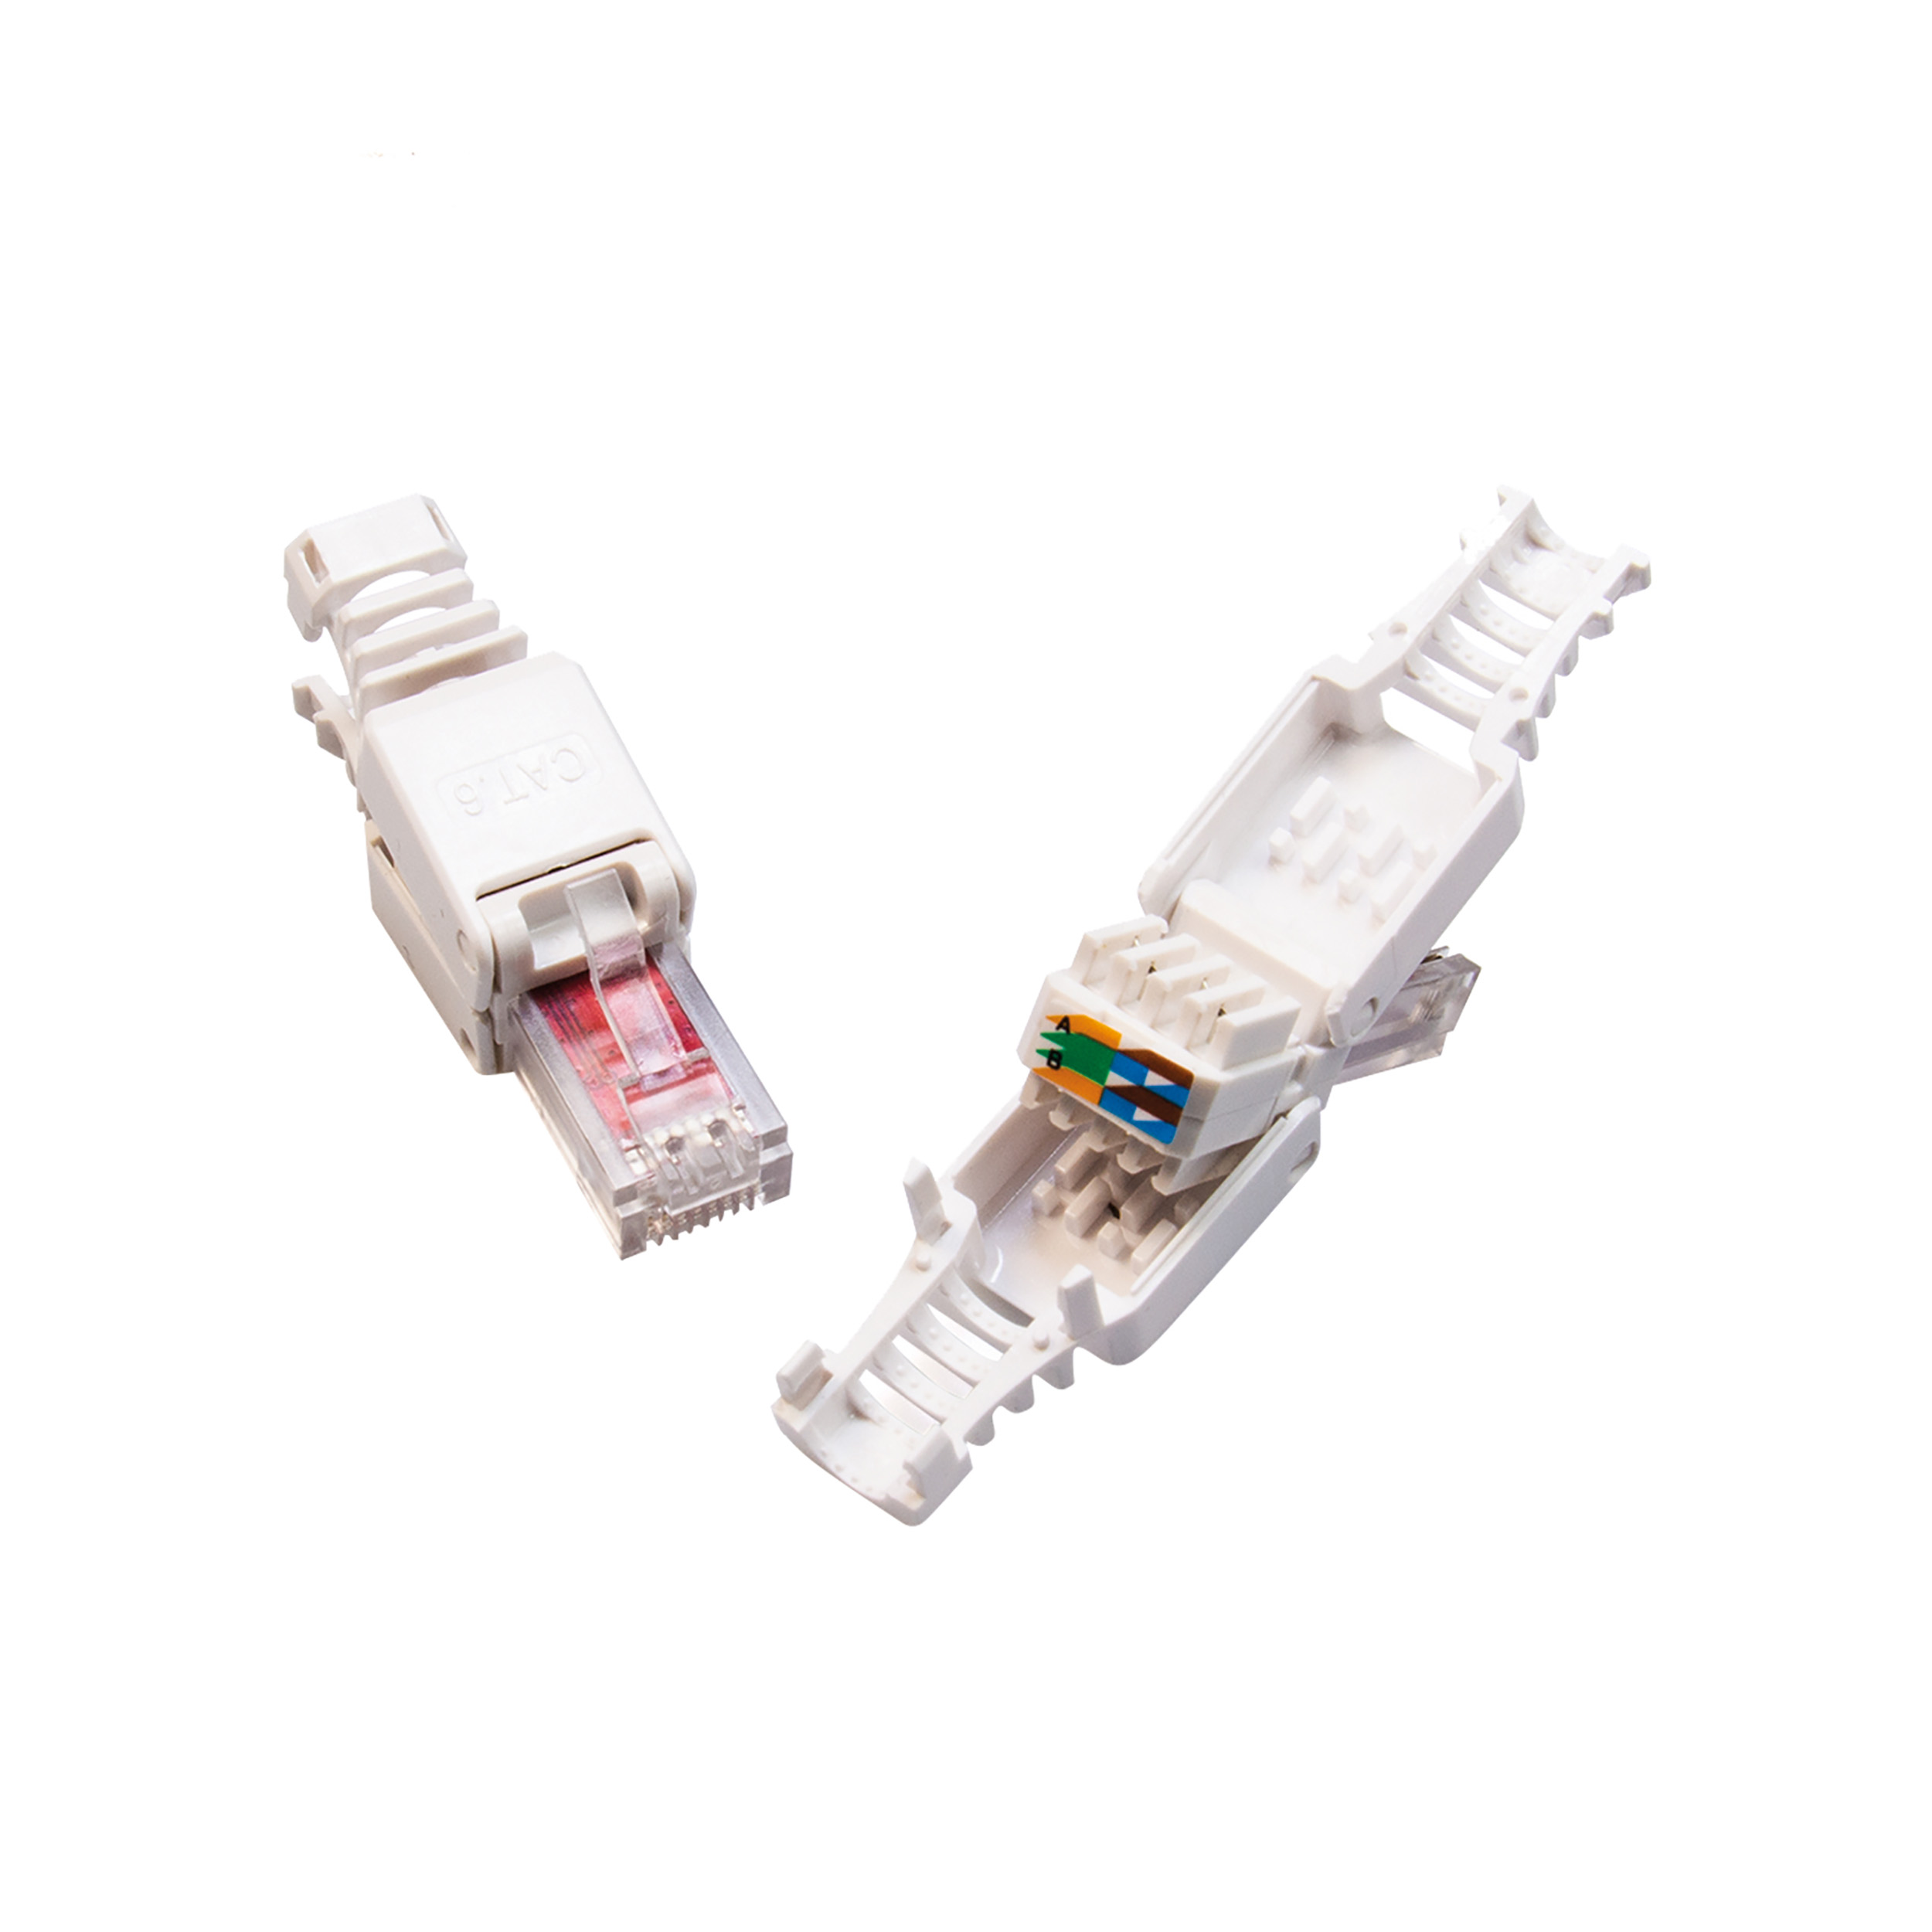 00.138.20 Technetix  UTP connector RJ45 - snap-on - Ziggo - KPN - wit